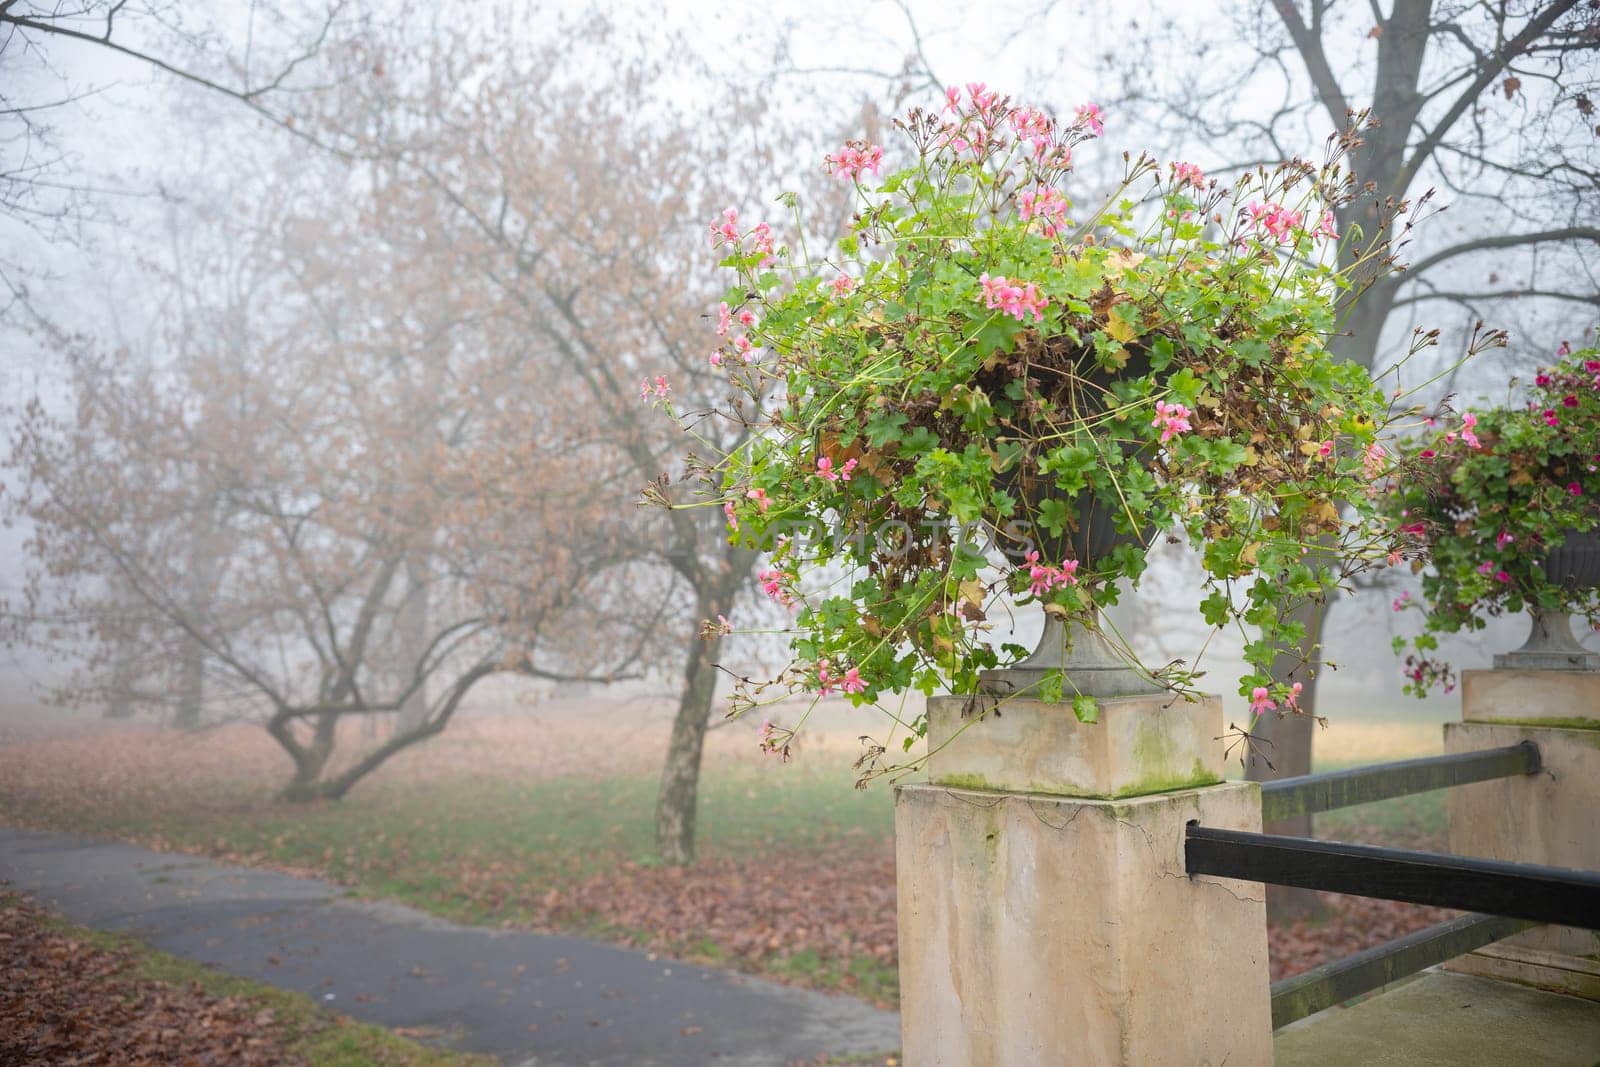 A vibrant flower pot adding life to the subtle tones of the surrounding park.